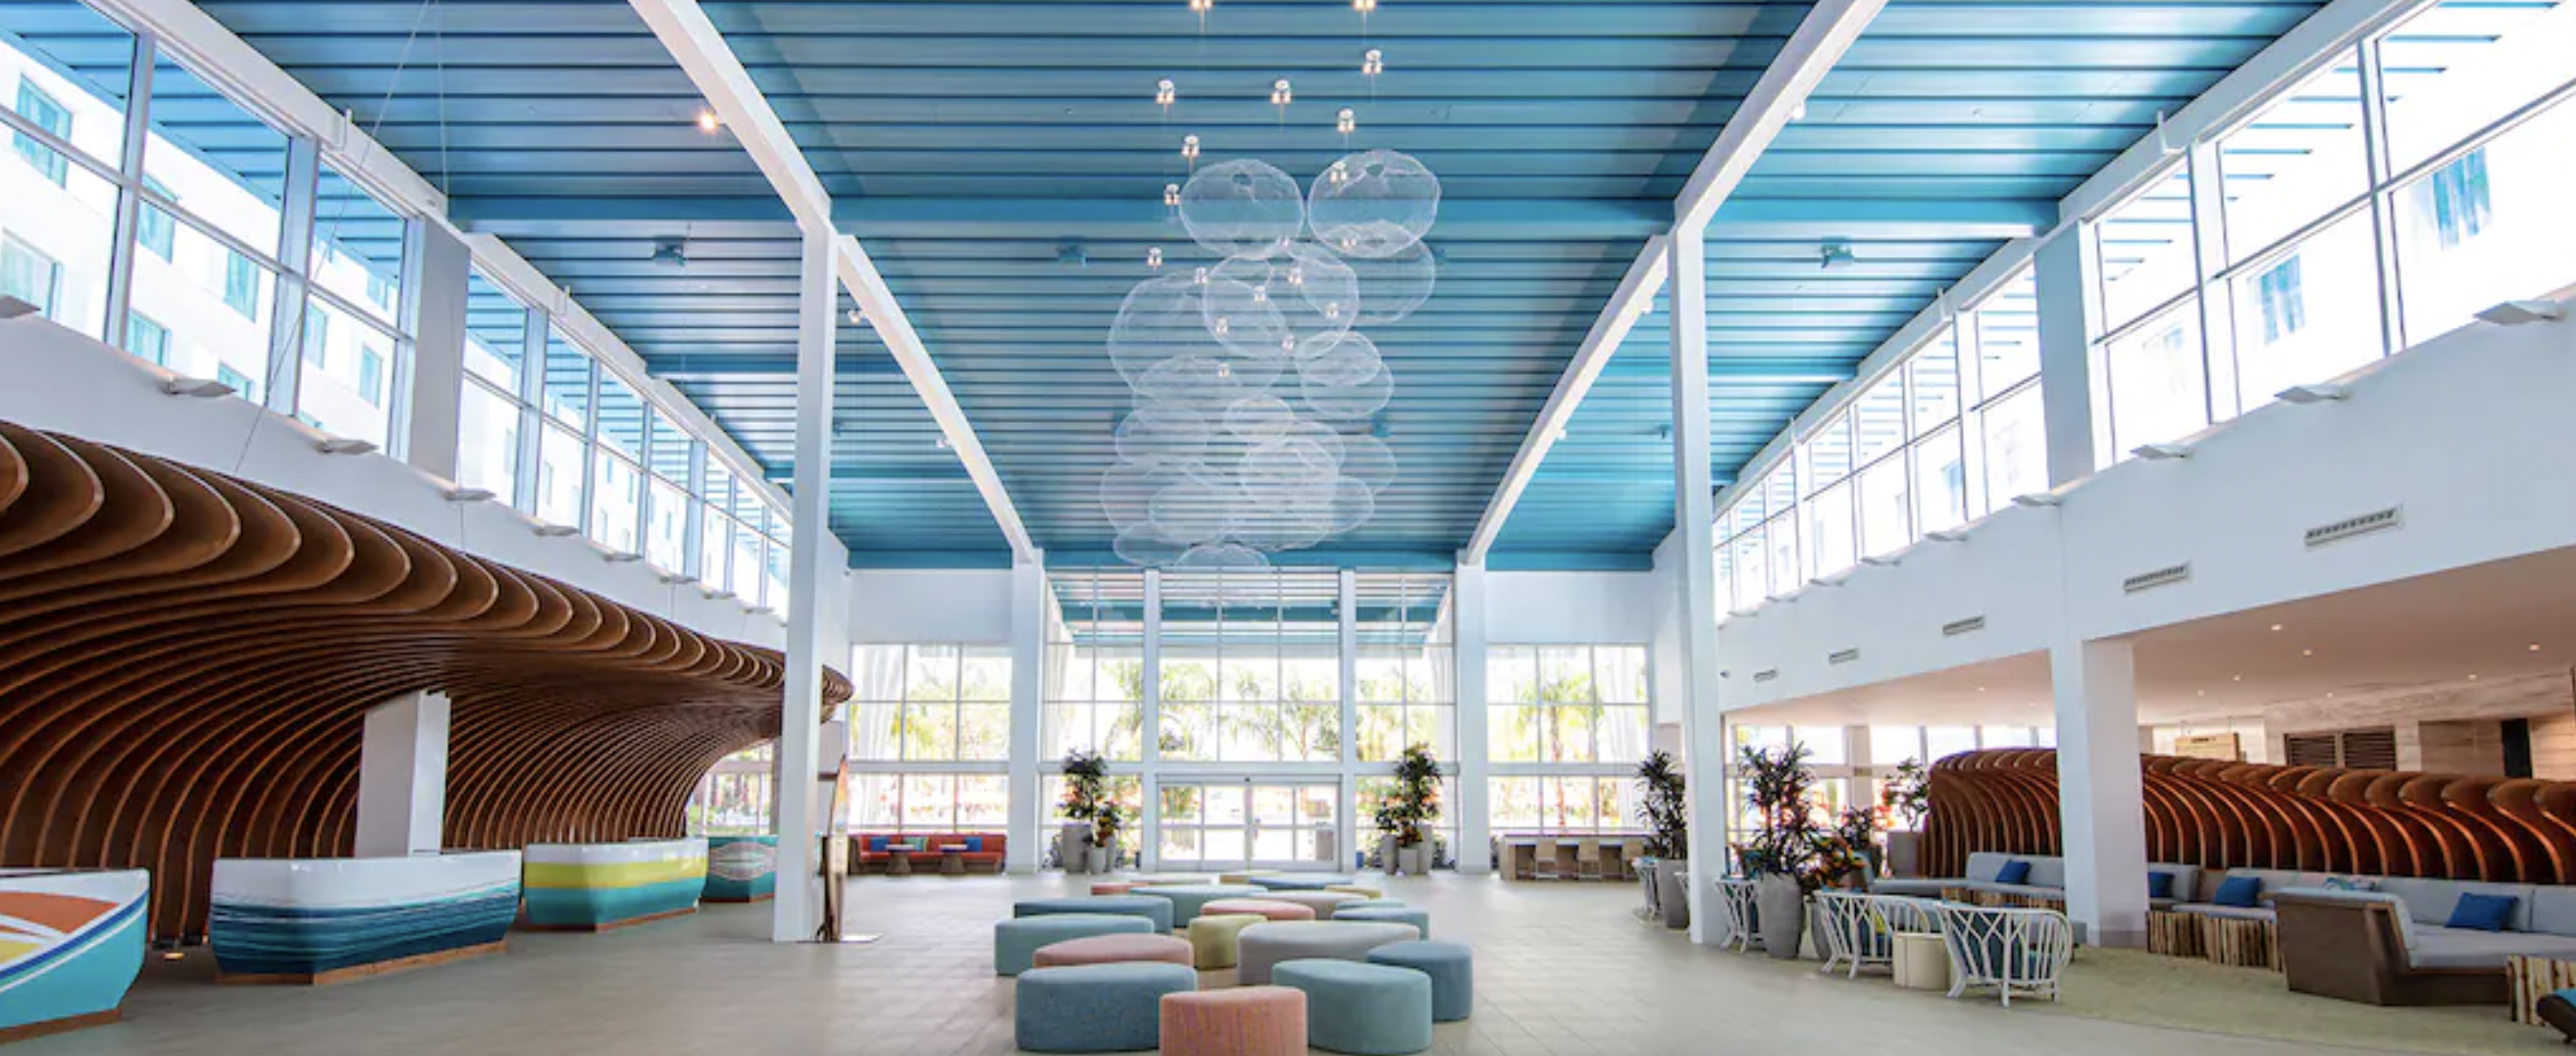 Universal Orlando's Endless Summer Resort - Surfside Inn Gets a Reopening  Date! - AllEars.Net